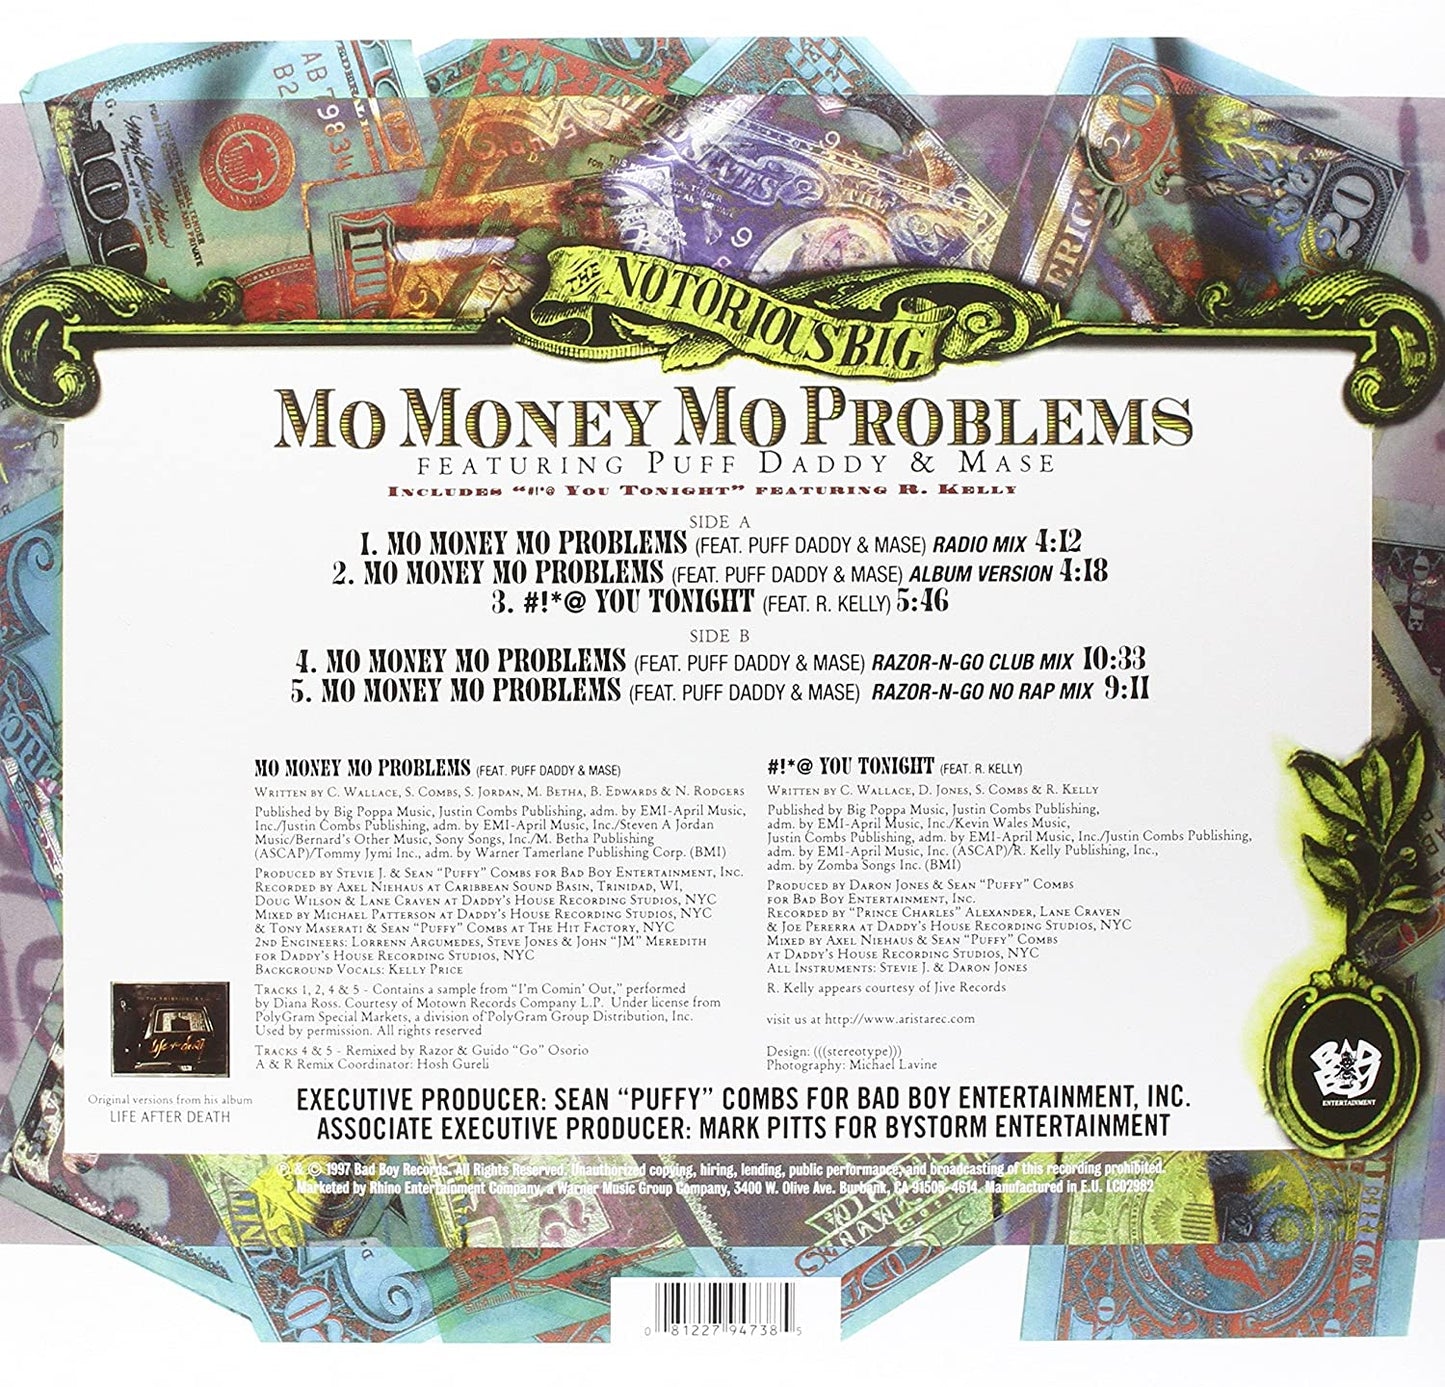 Notorious B.I.G./Mo Money, Mo Problems [12"]